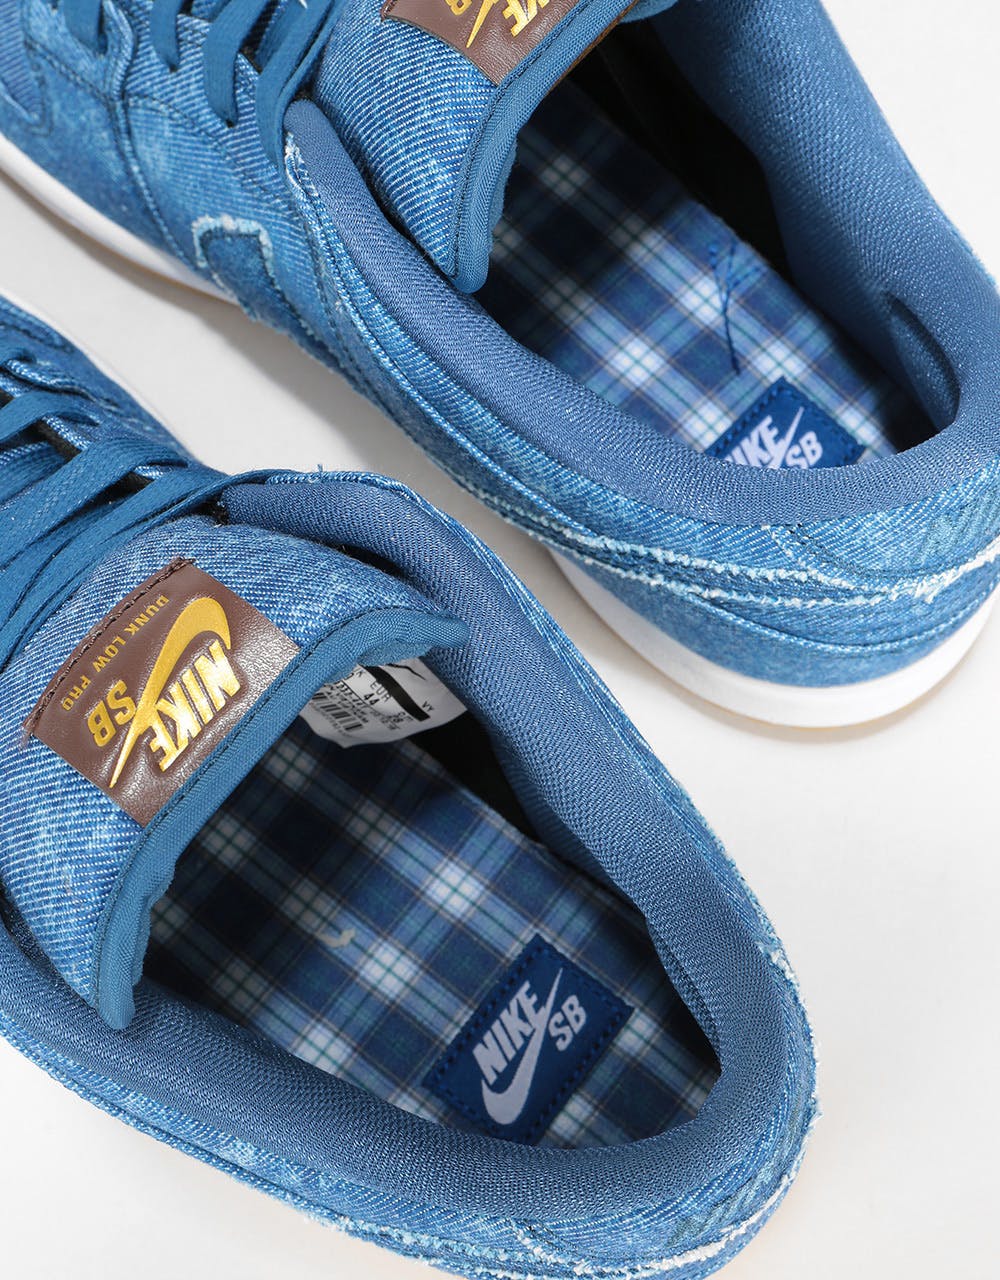 Nike SB Dunk Low Skate Shoes - Hydrogen Blue/Hydrogen Blue-White – Route One